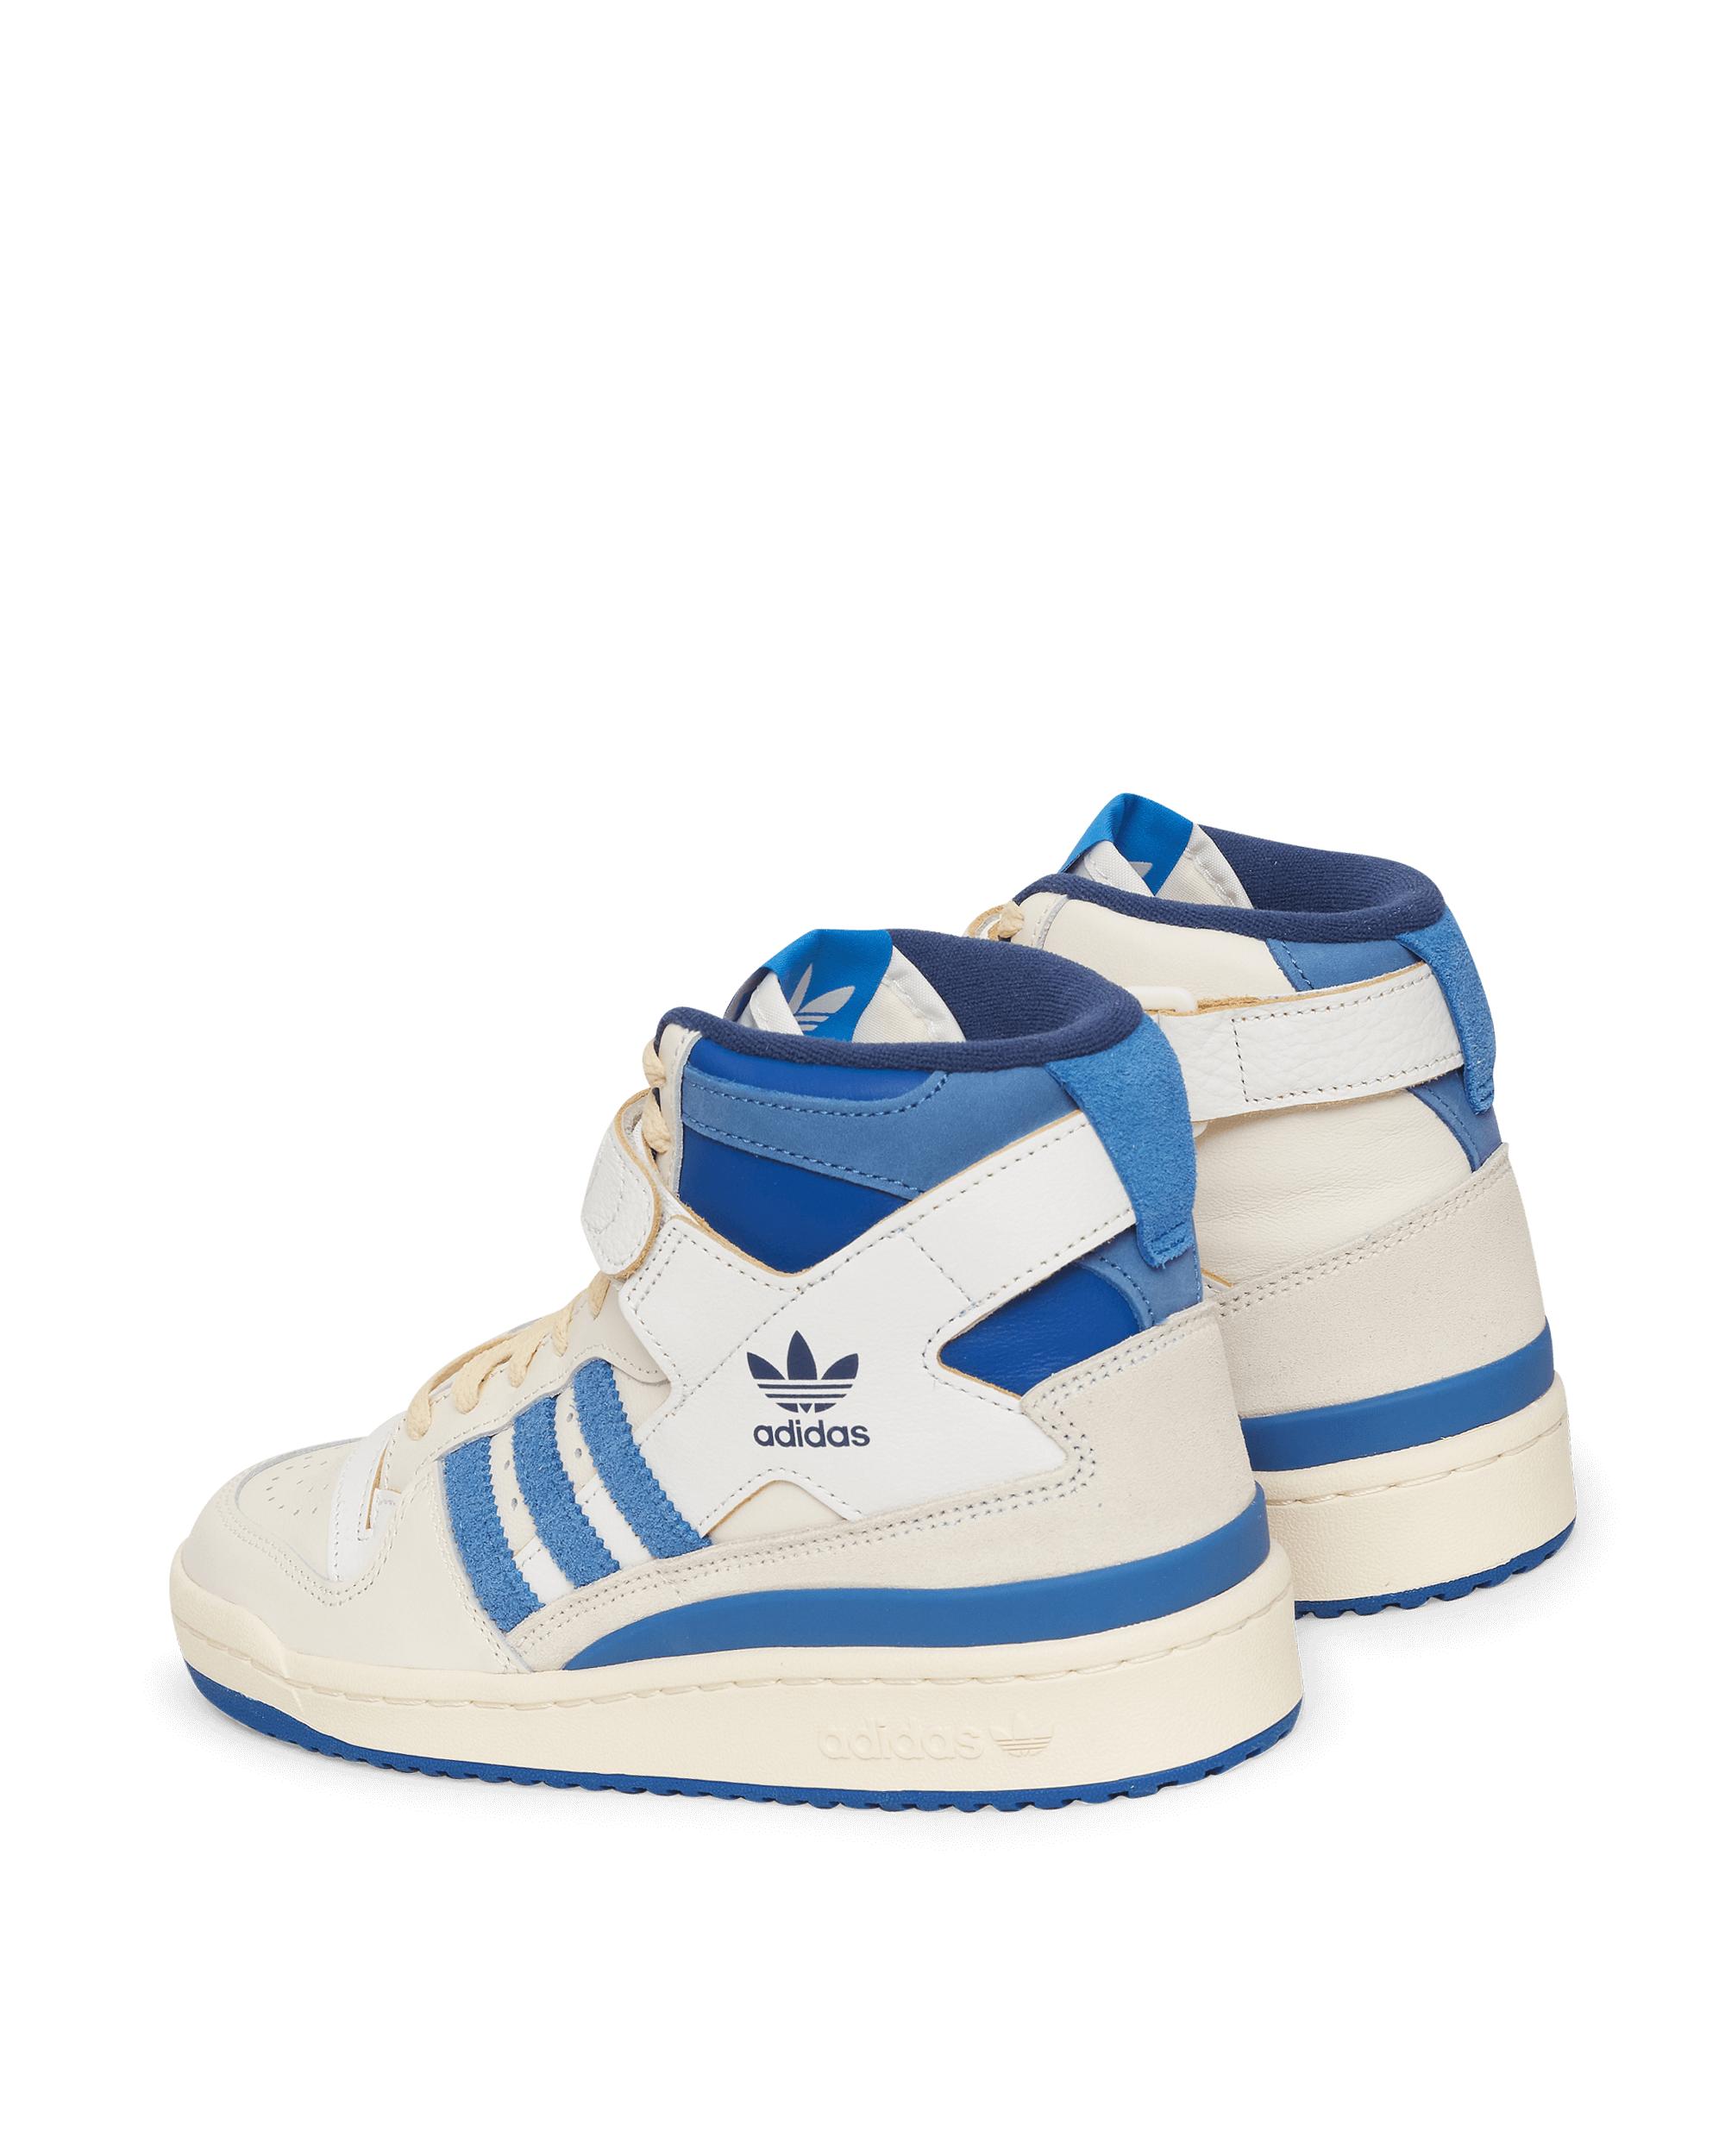 adidas Originals Forum 84 High Blue Thread Sneakers for Men | Lyst